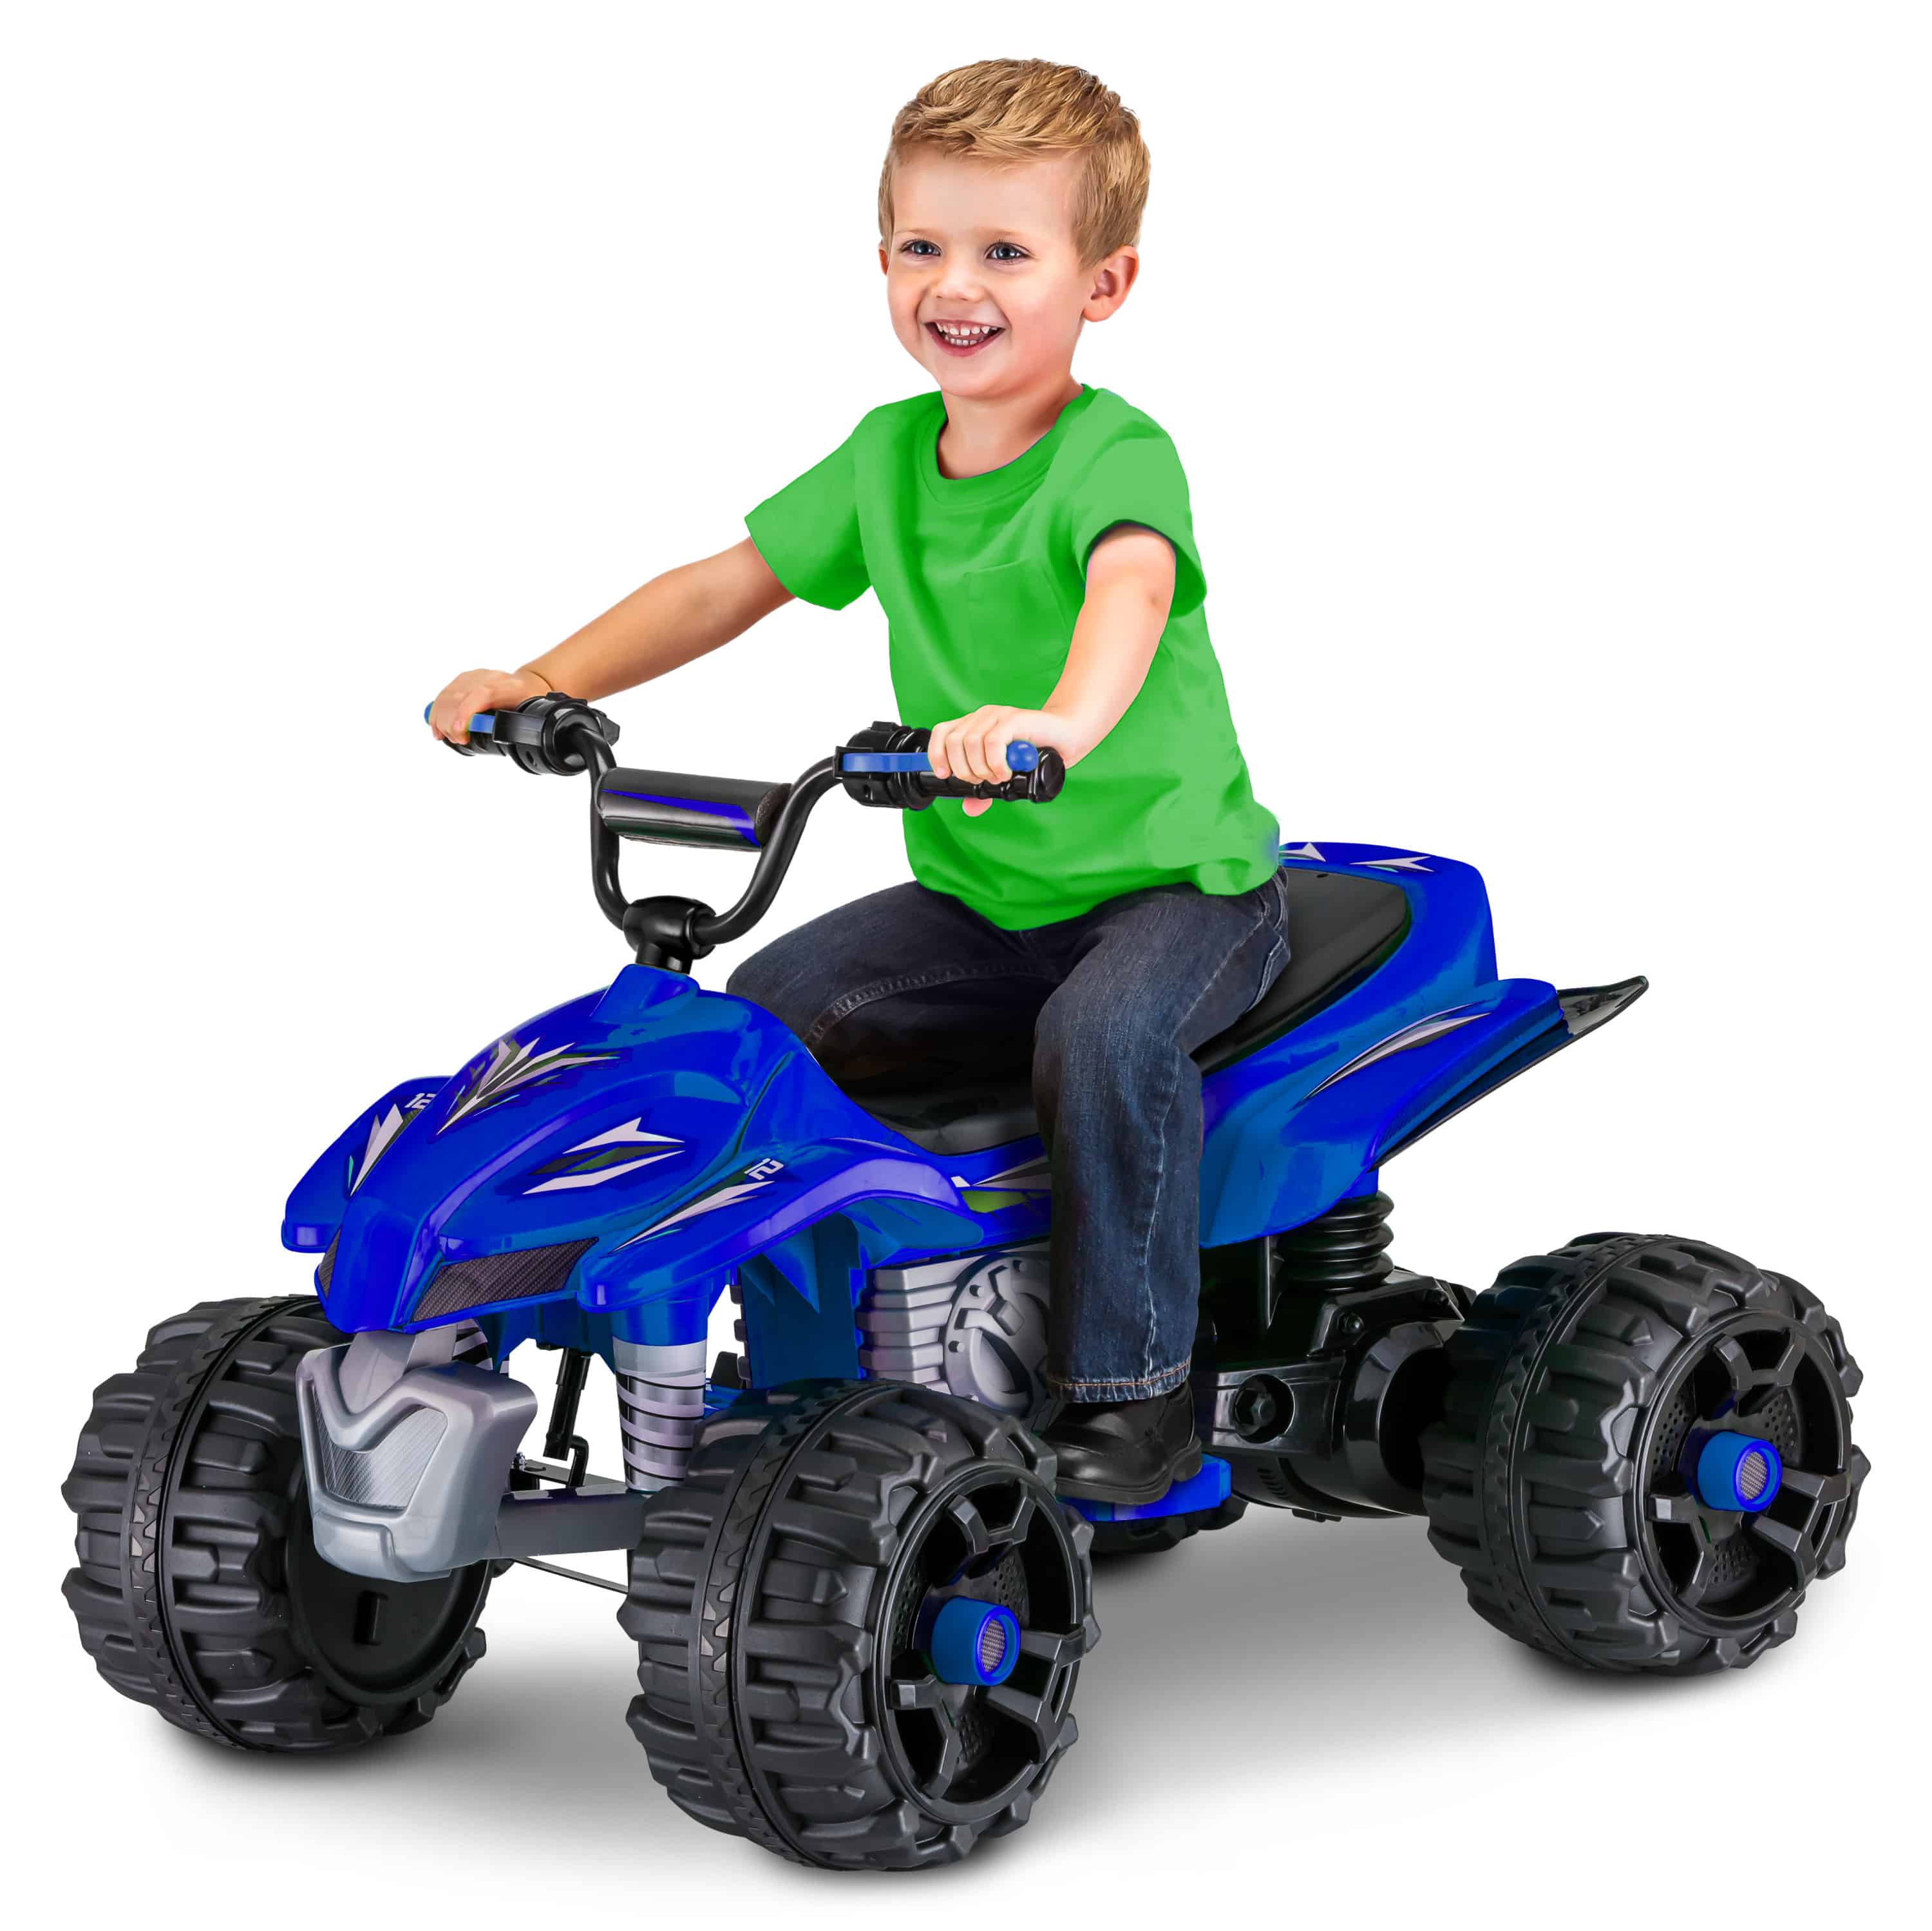 Sport ATV 12-Volt Ride-On Toy $98 Shipped (Reg. $150)